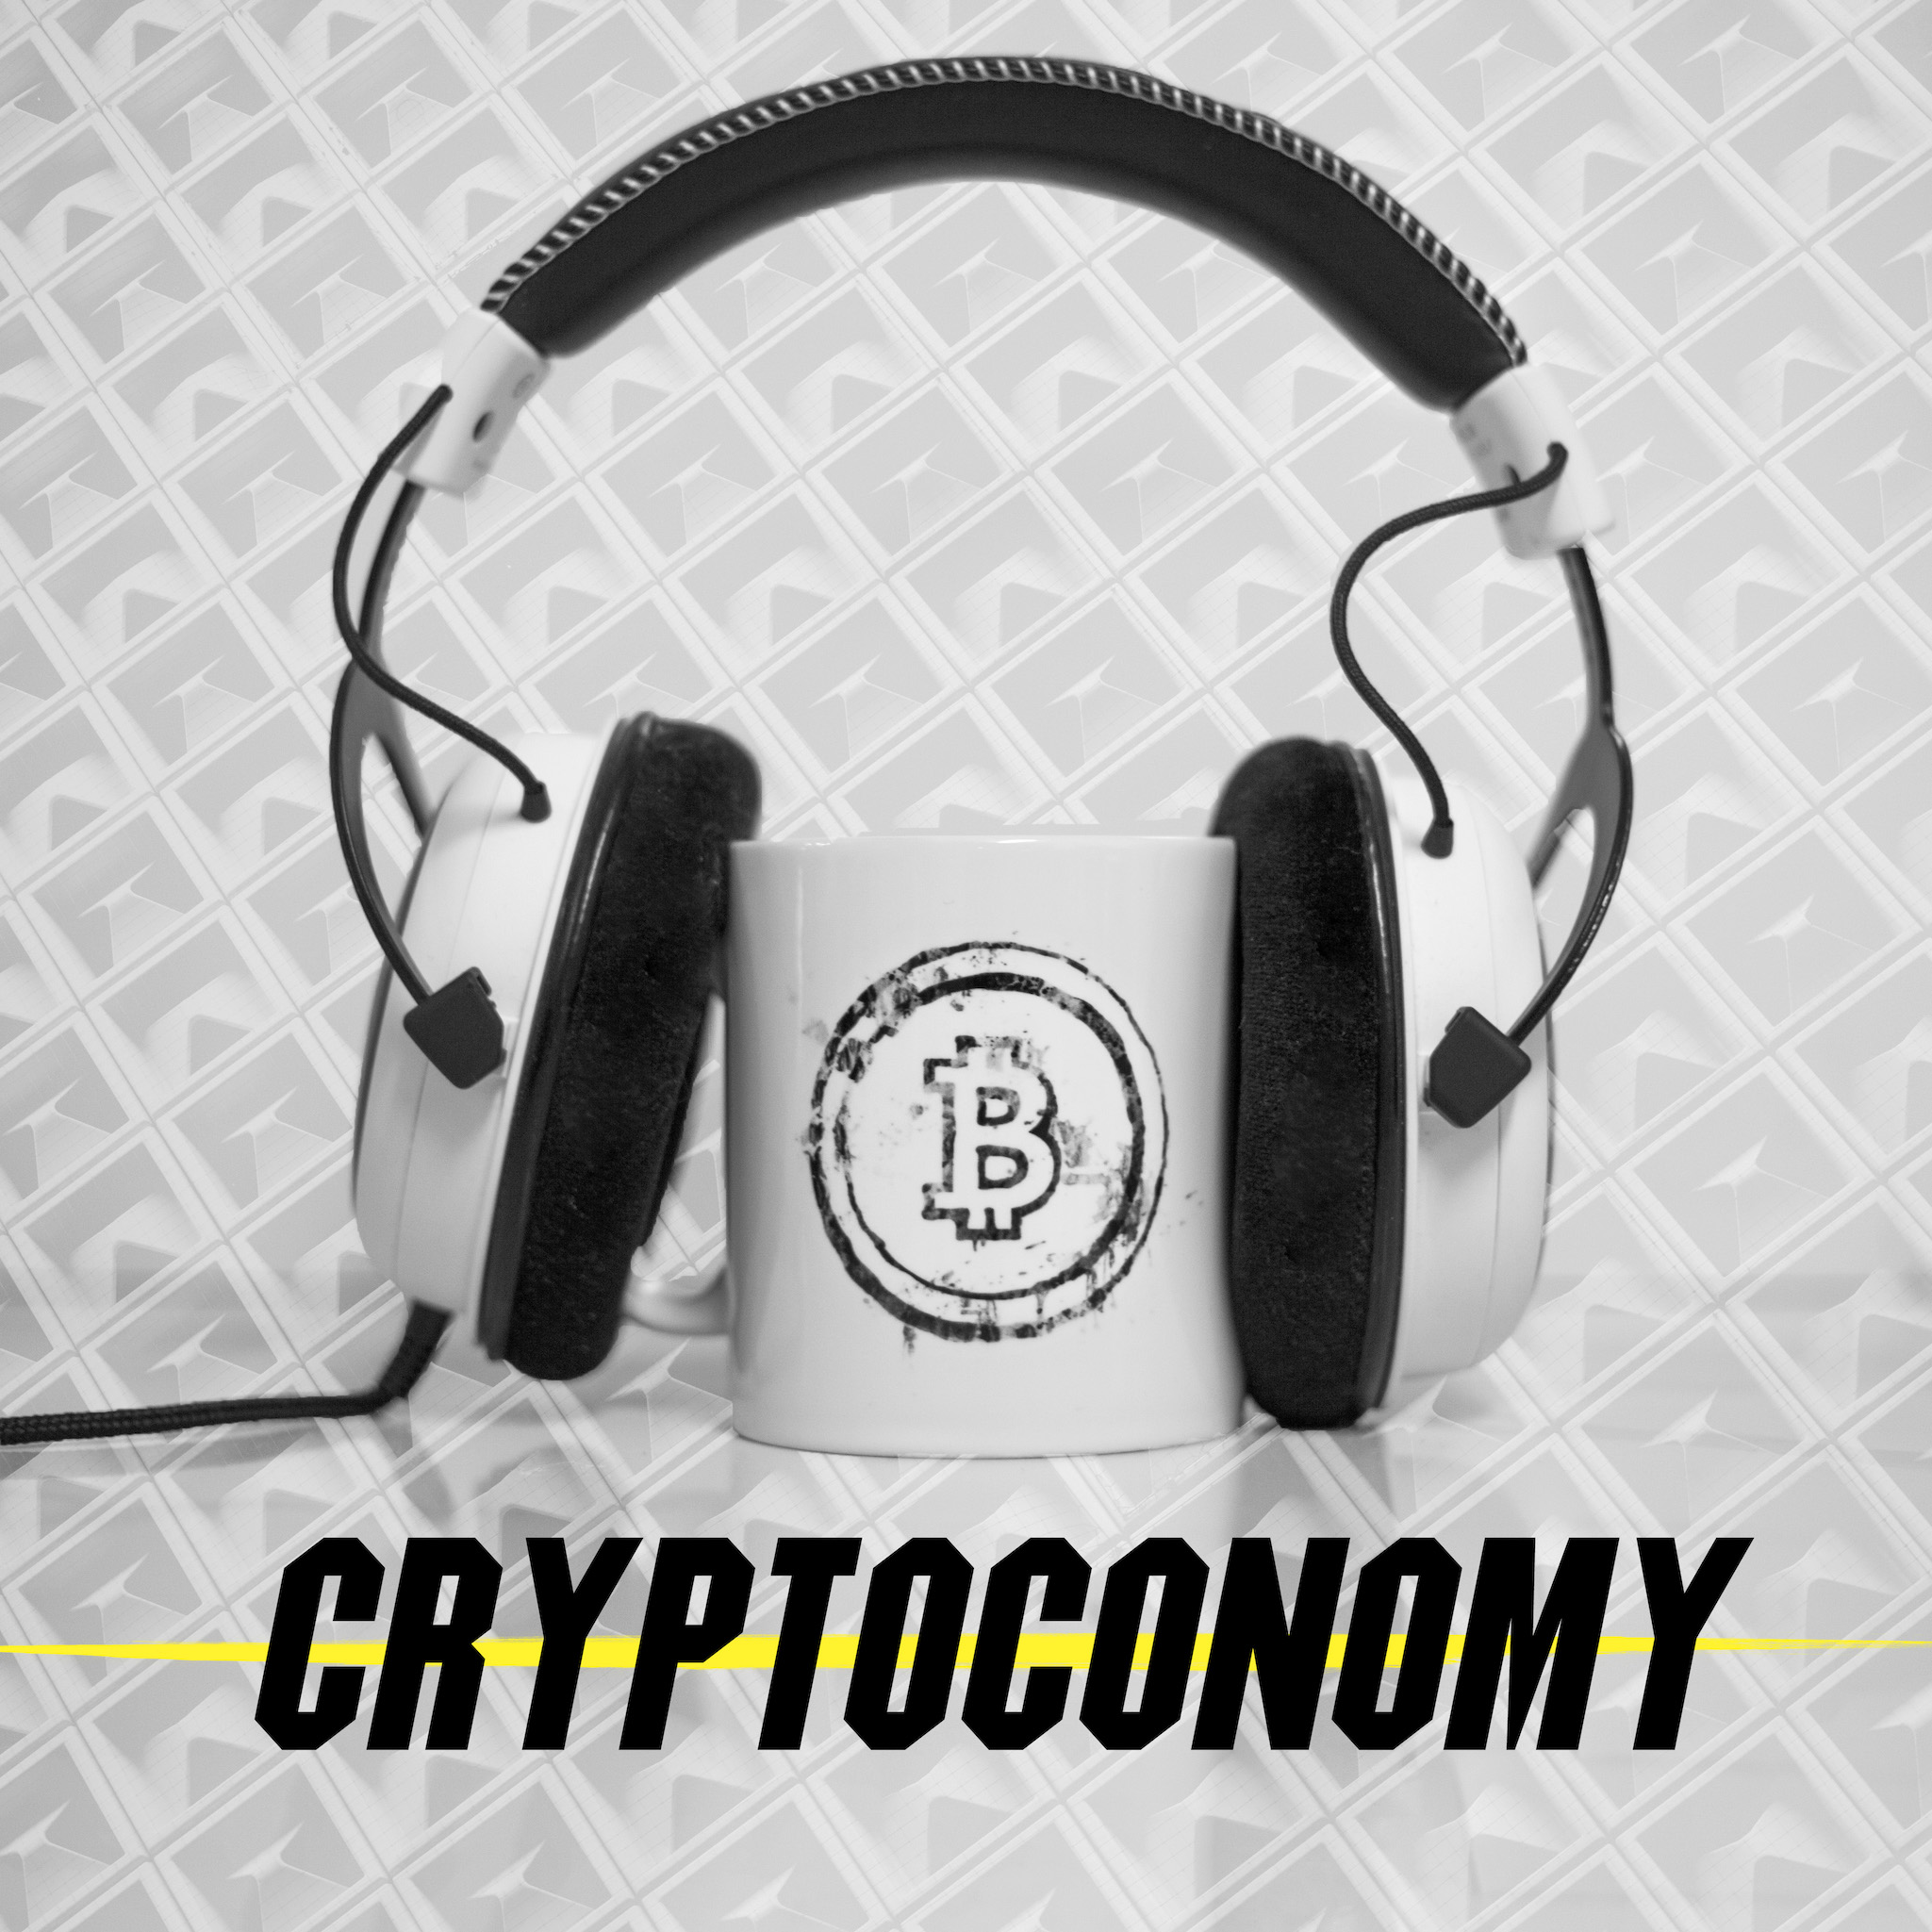 CryptoQuikRead_186 - The Cryptocurrency Phenomenon [Part 1]